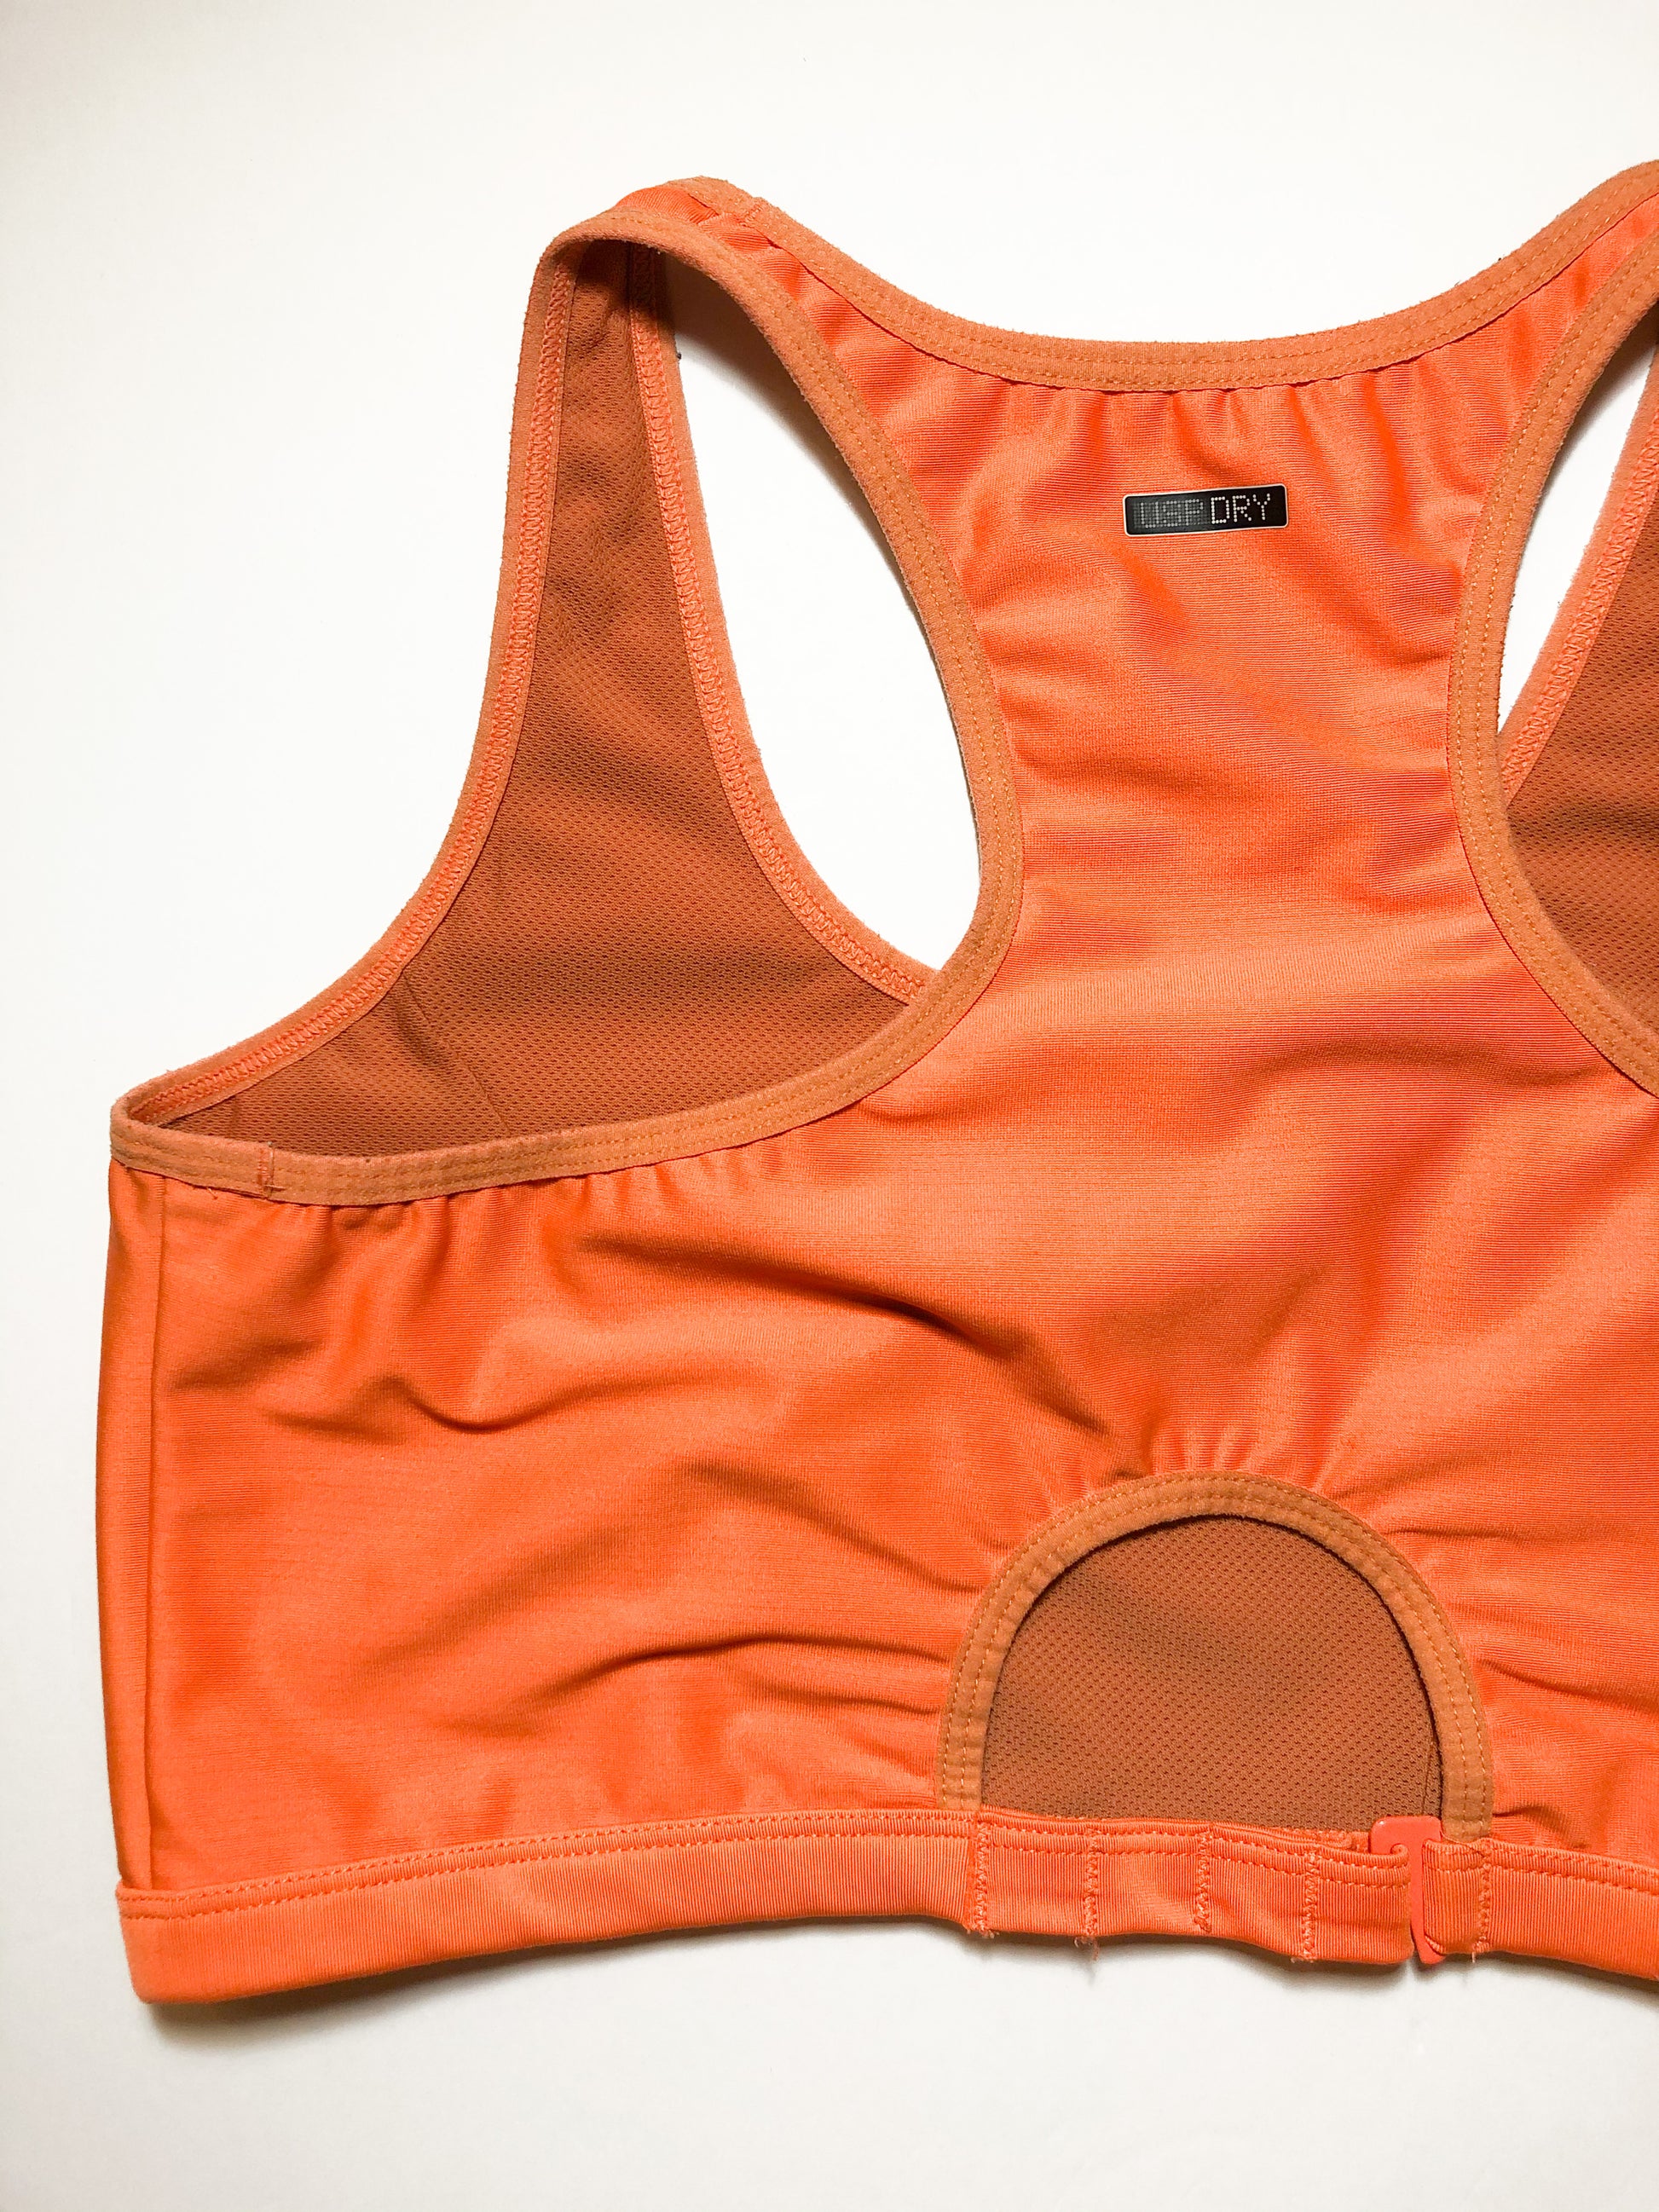 Puma Orange Sports Bra with Back Cutout - S/M – Le Prix Fashion & Consulting